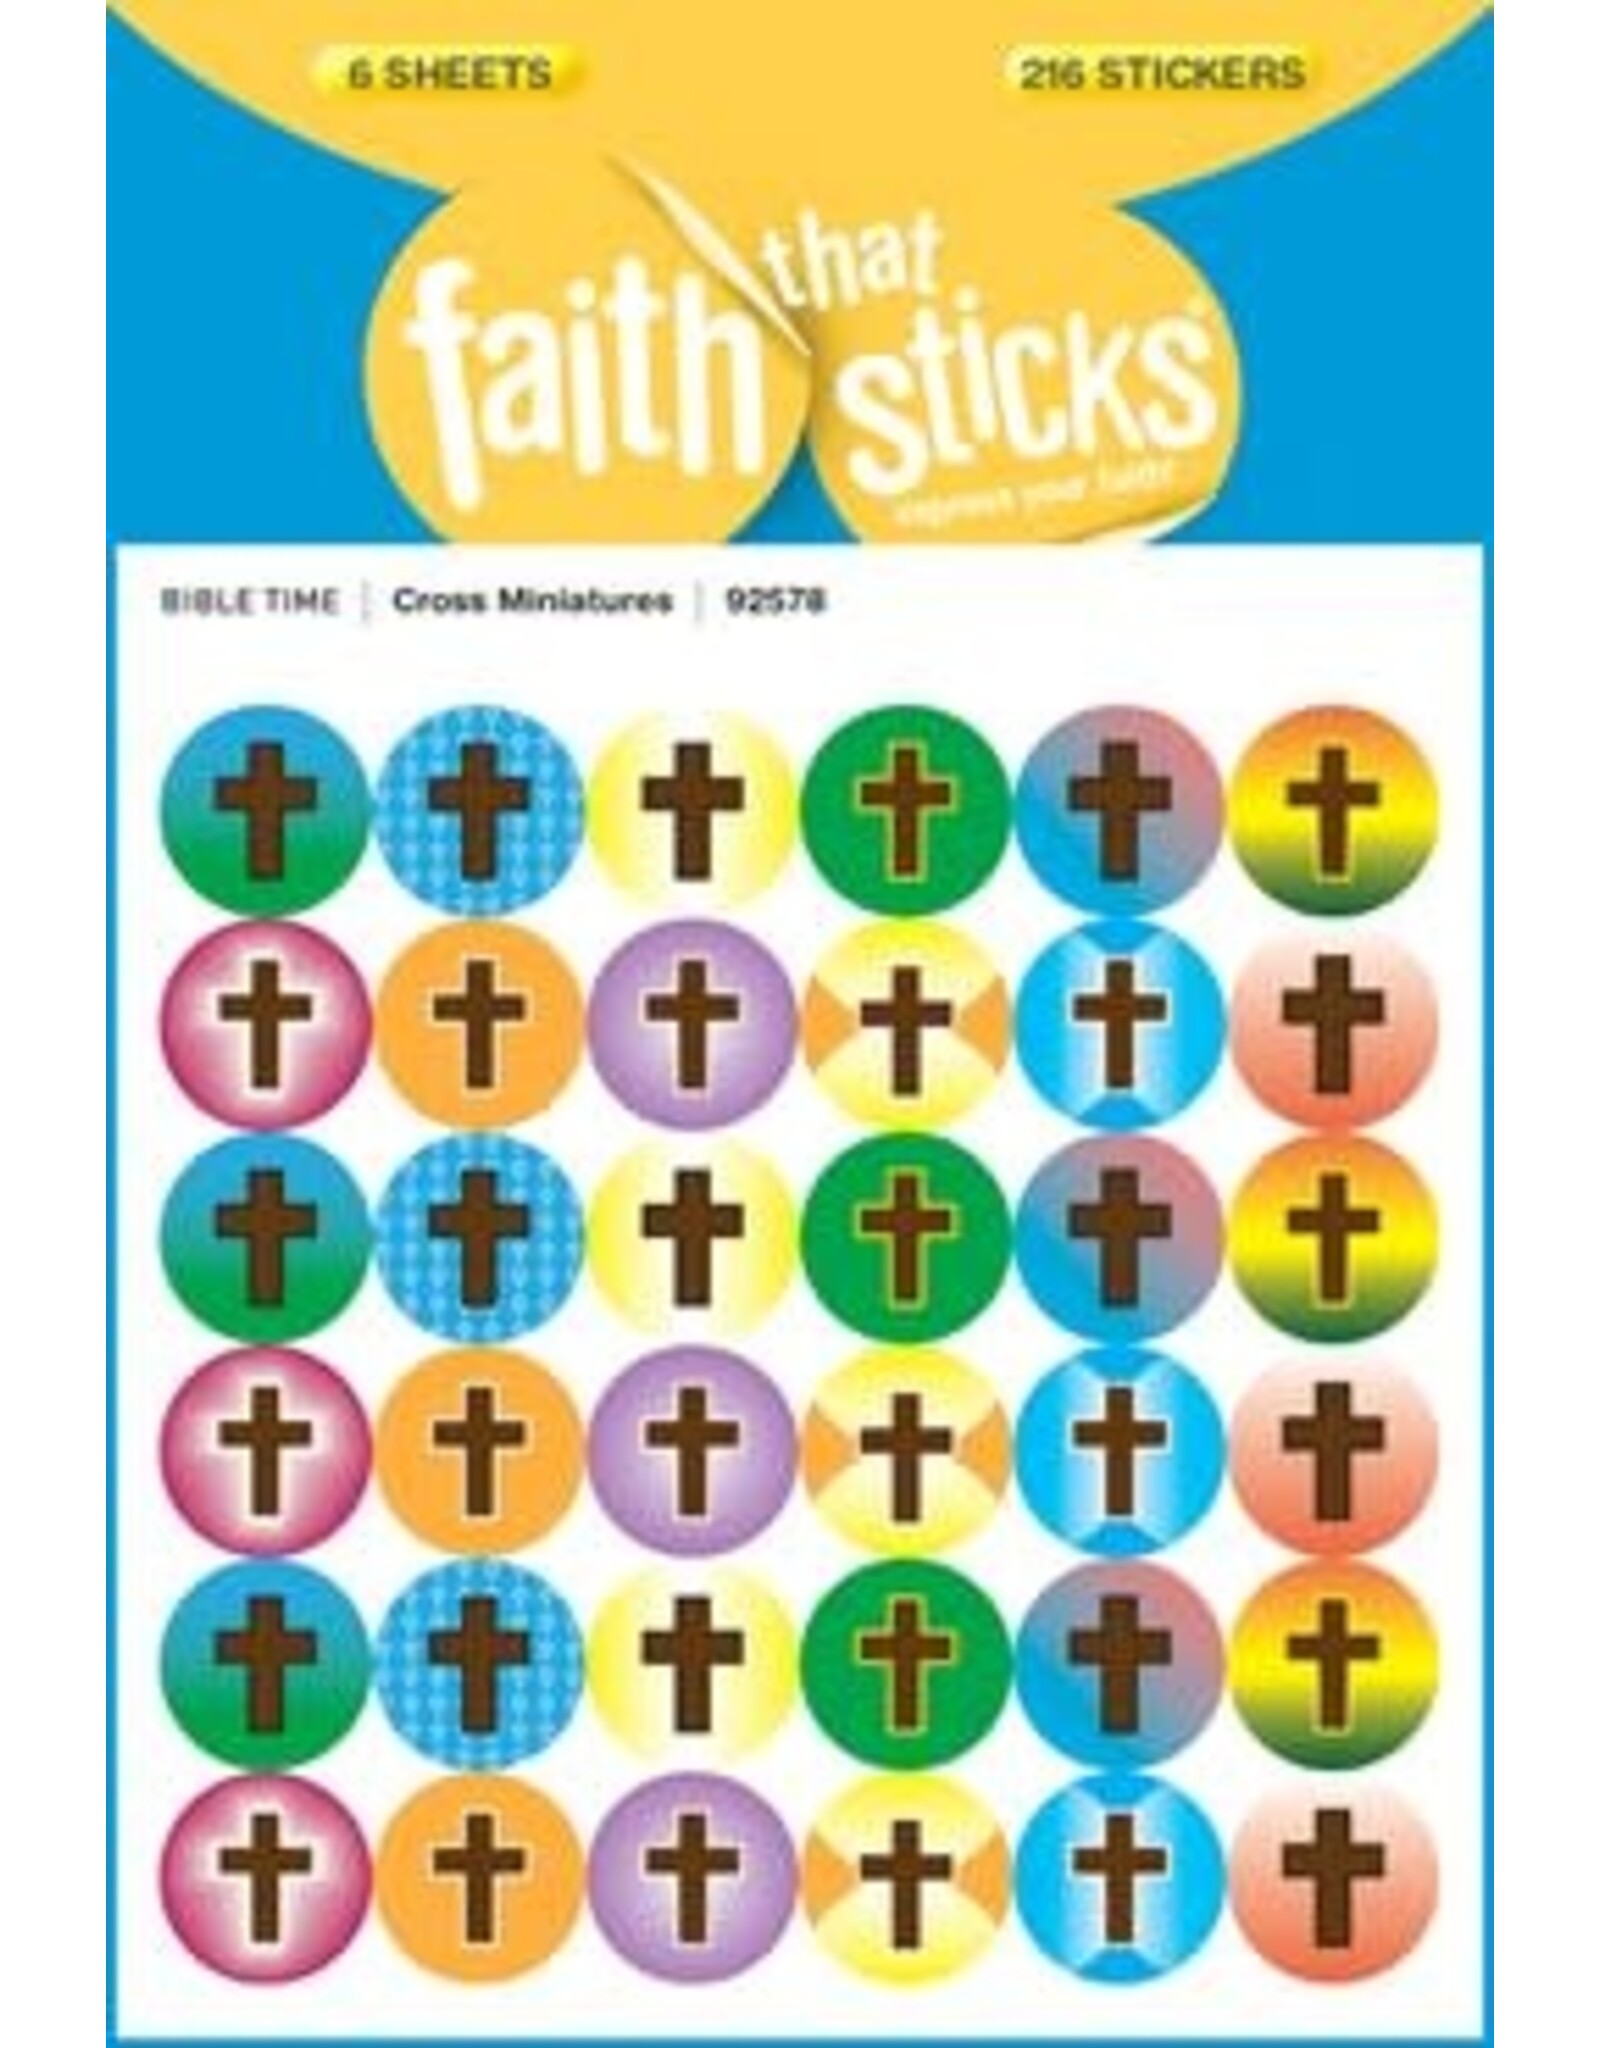 Cross Miniatures Stickers